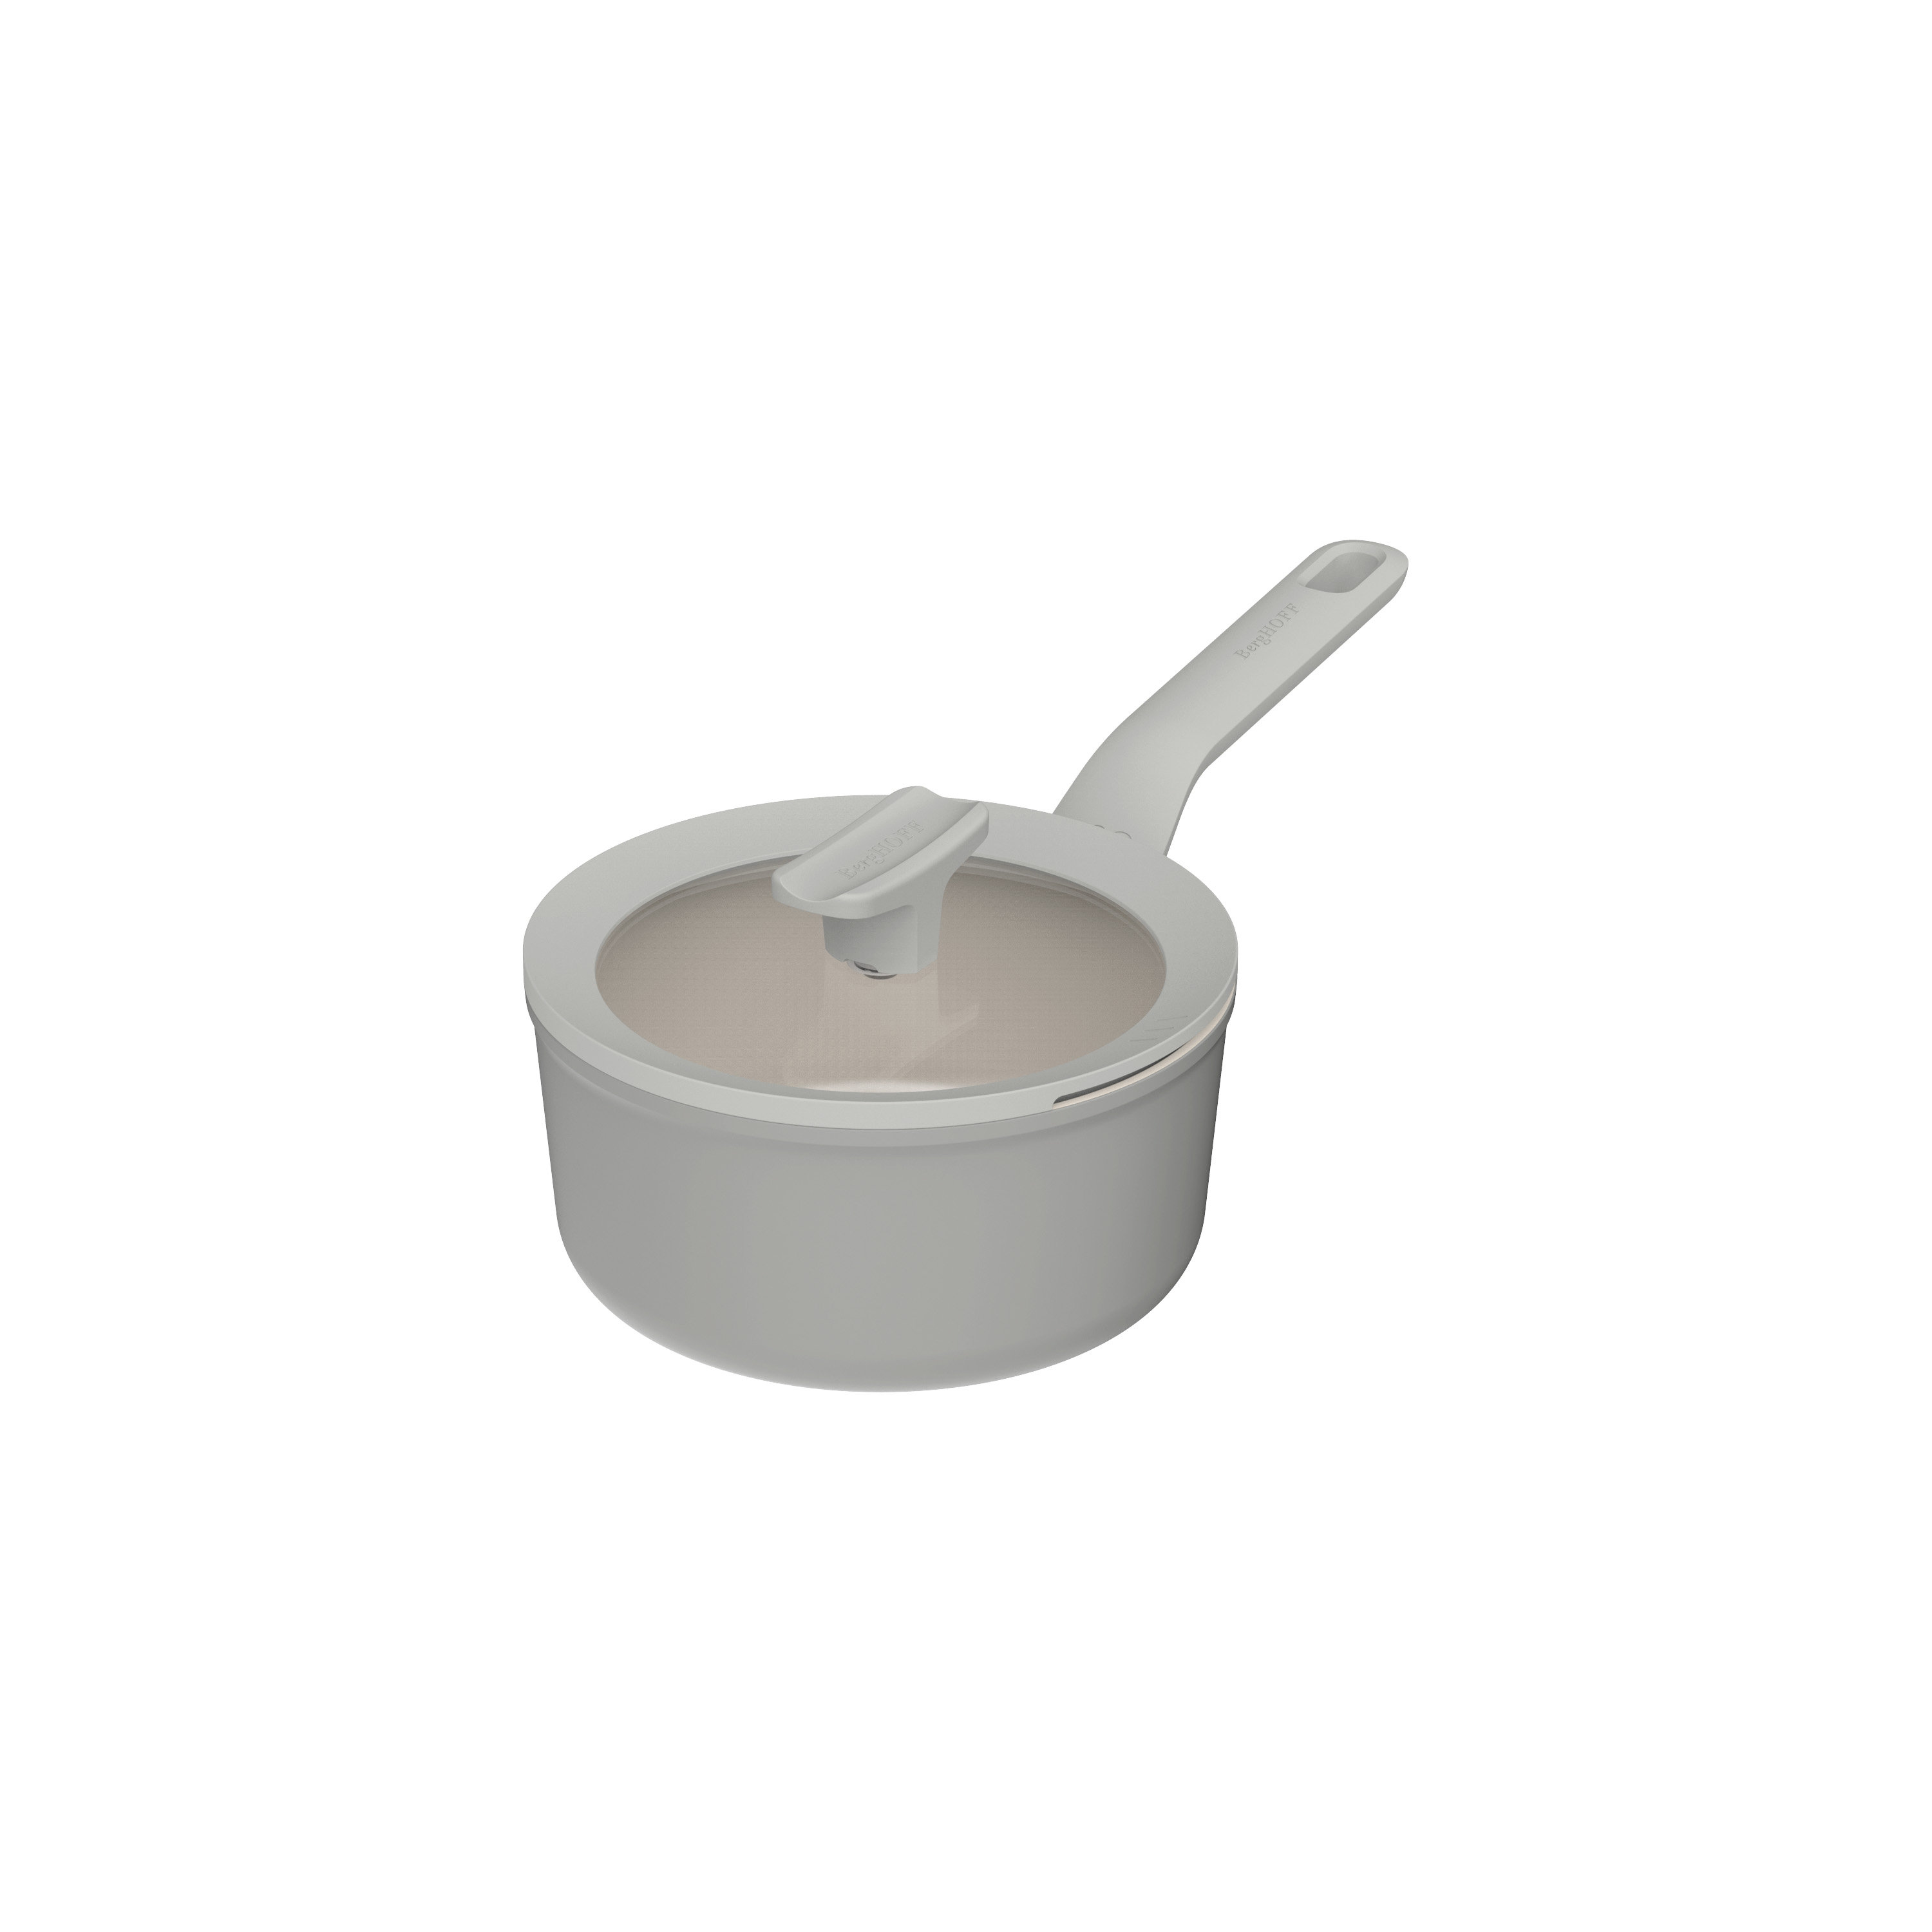 BergHOFF Balance Non-Stick Ceramic Saucepan 7, 2.1qt. with Glass Lid, Recycled Aluminum, Moonmist